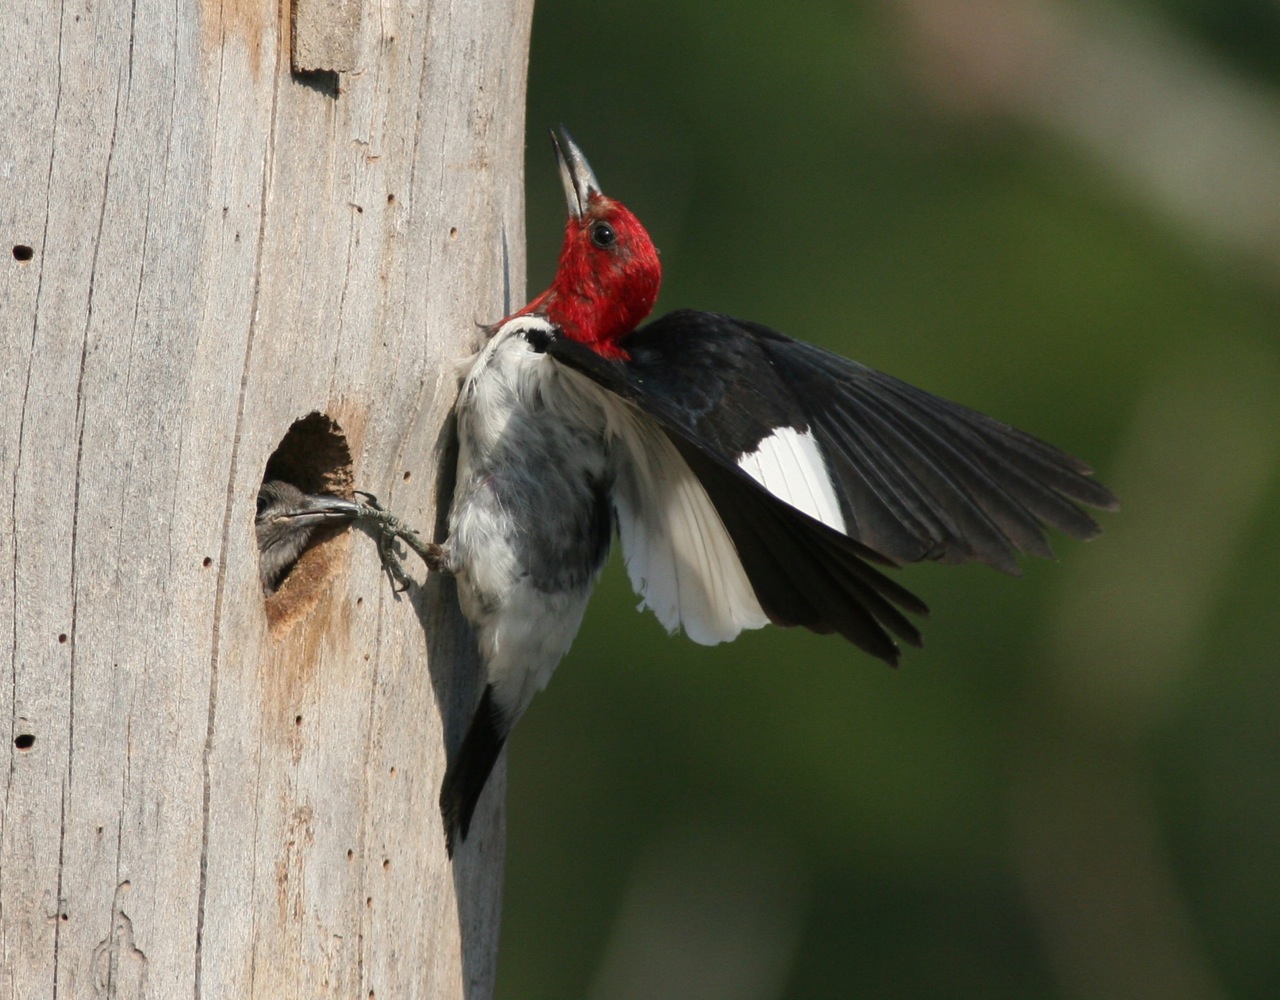 Woodpecker Bird Flying Pictures